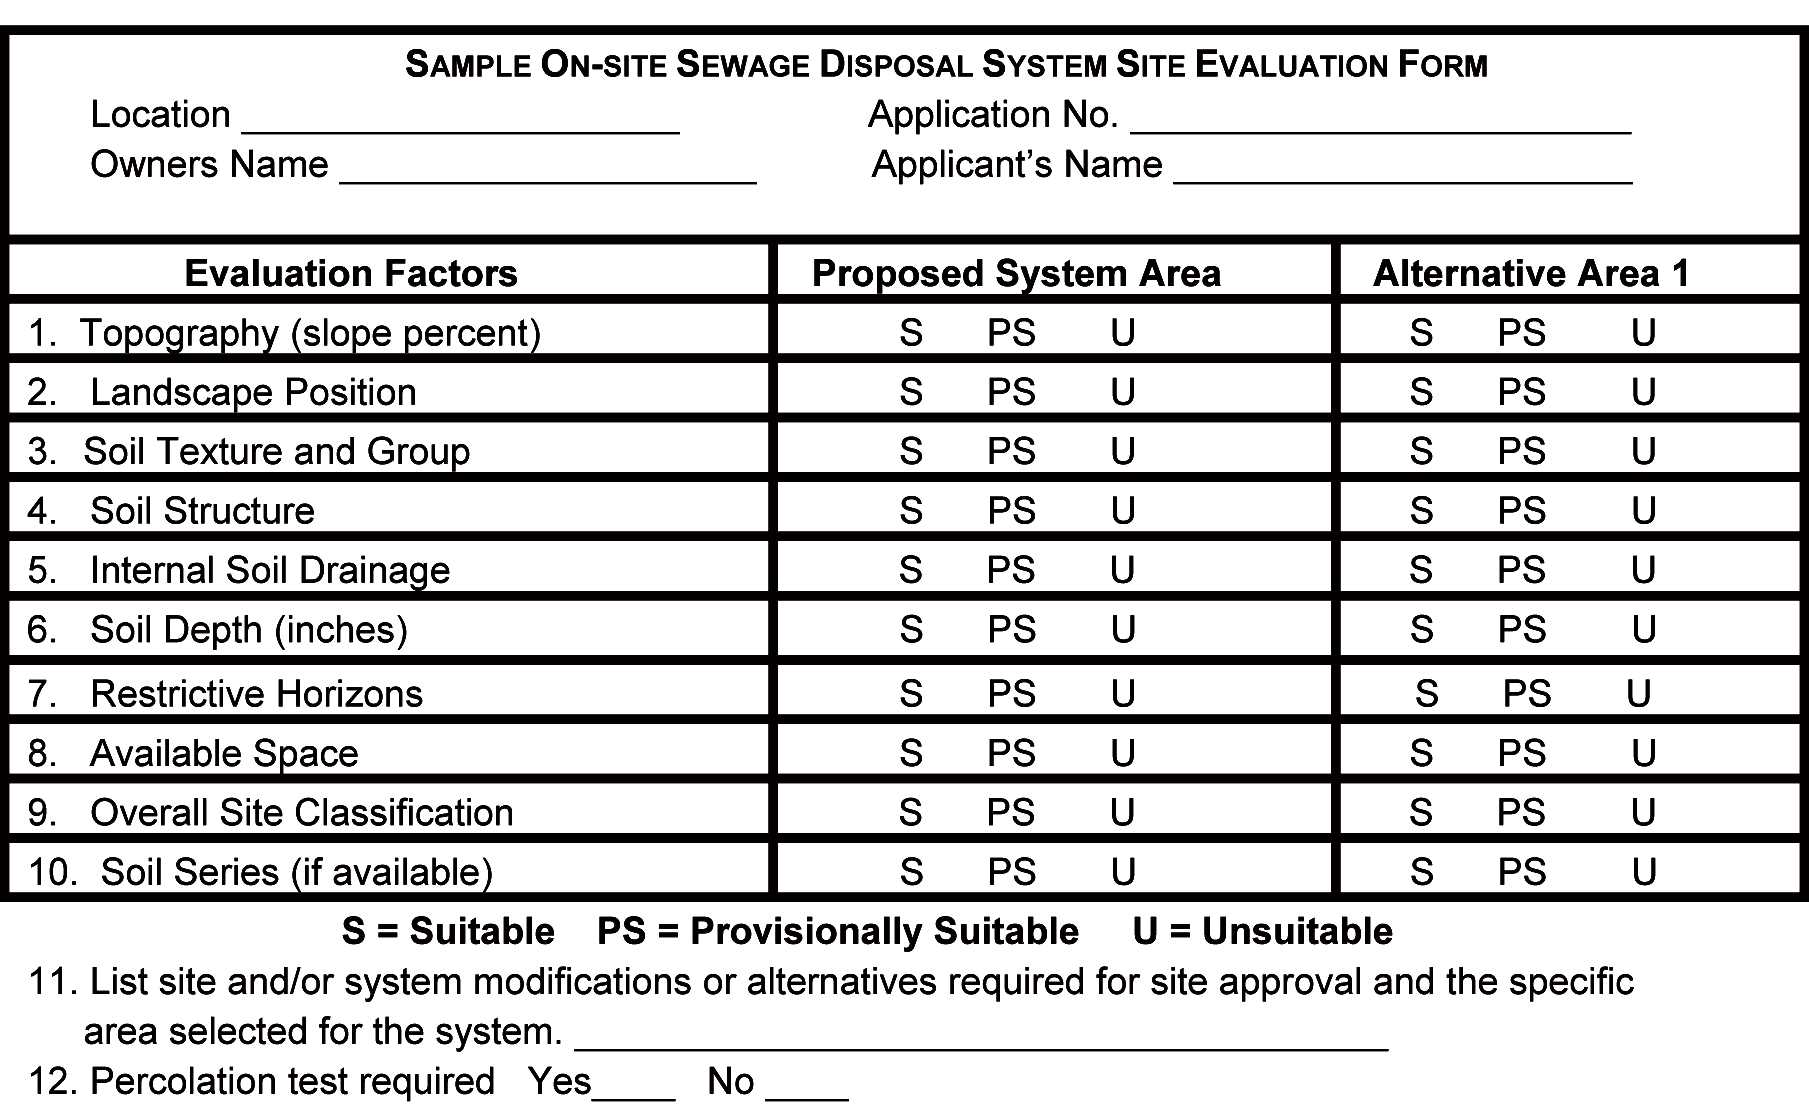 Figure 10.6. On-site Sewage Disposal System Site Evaluation Form